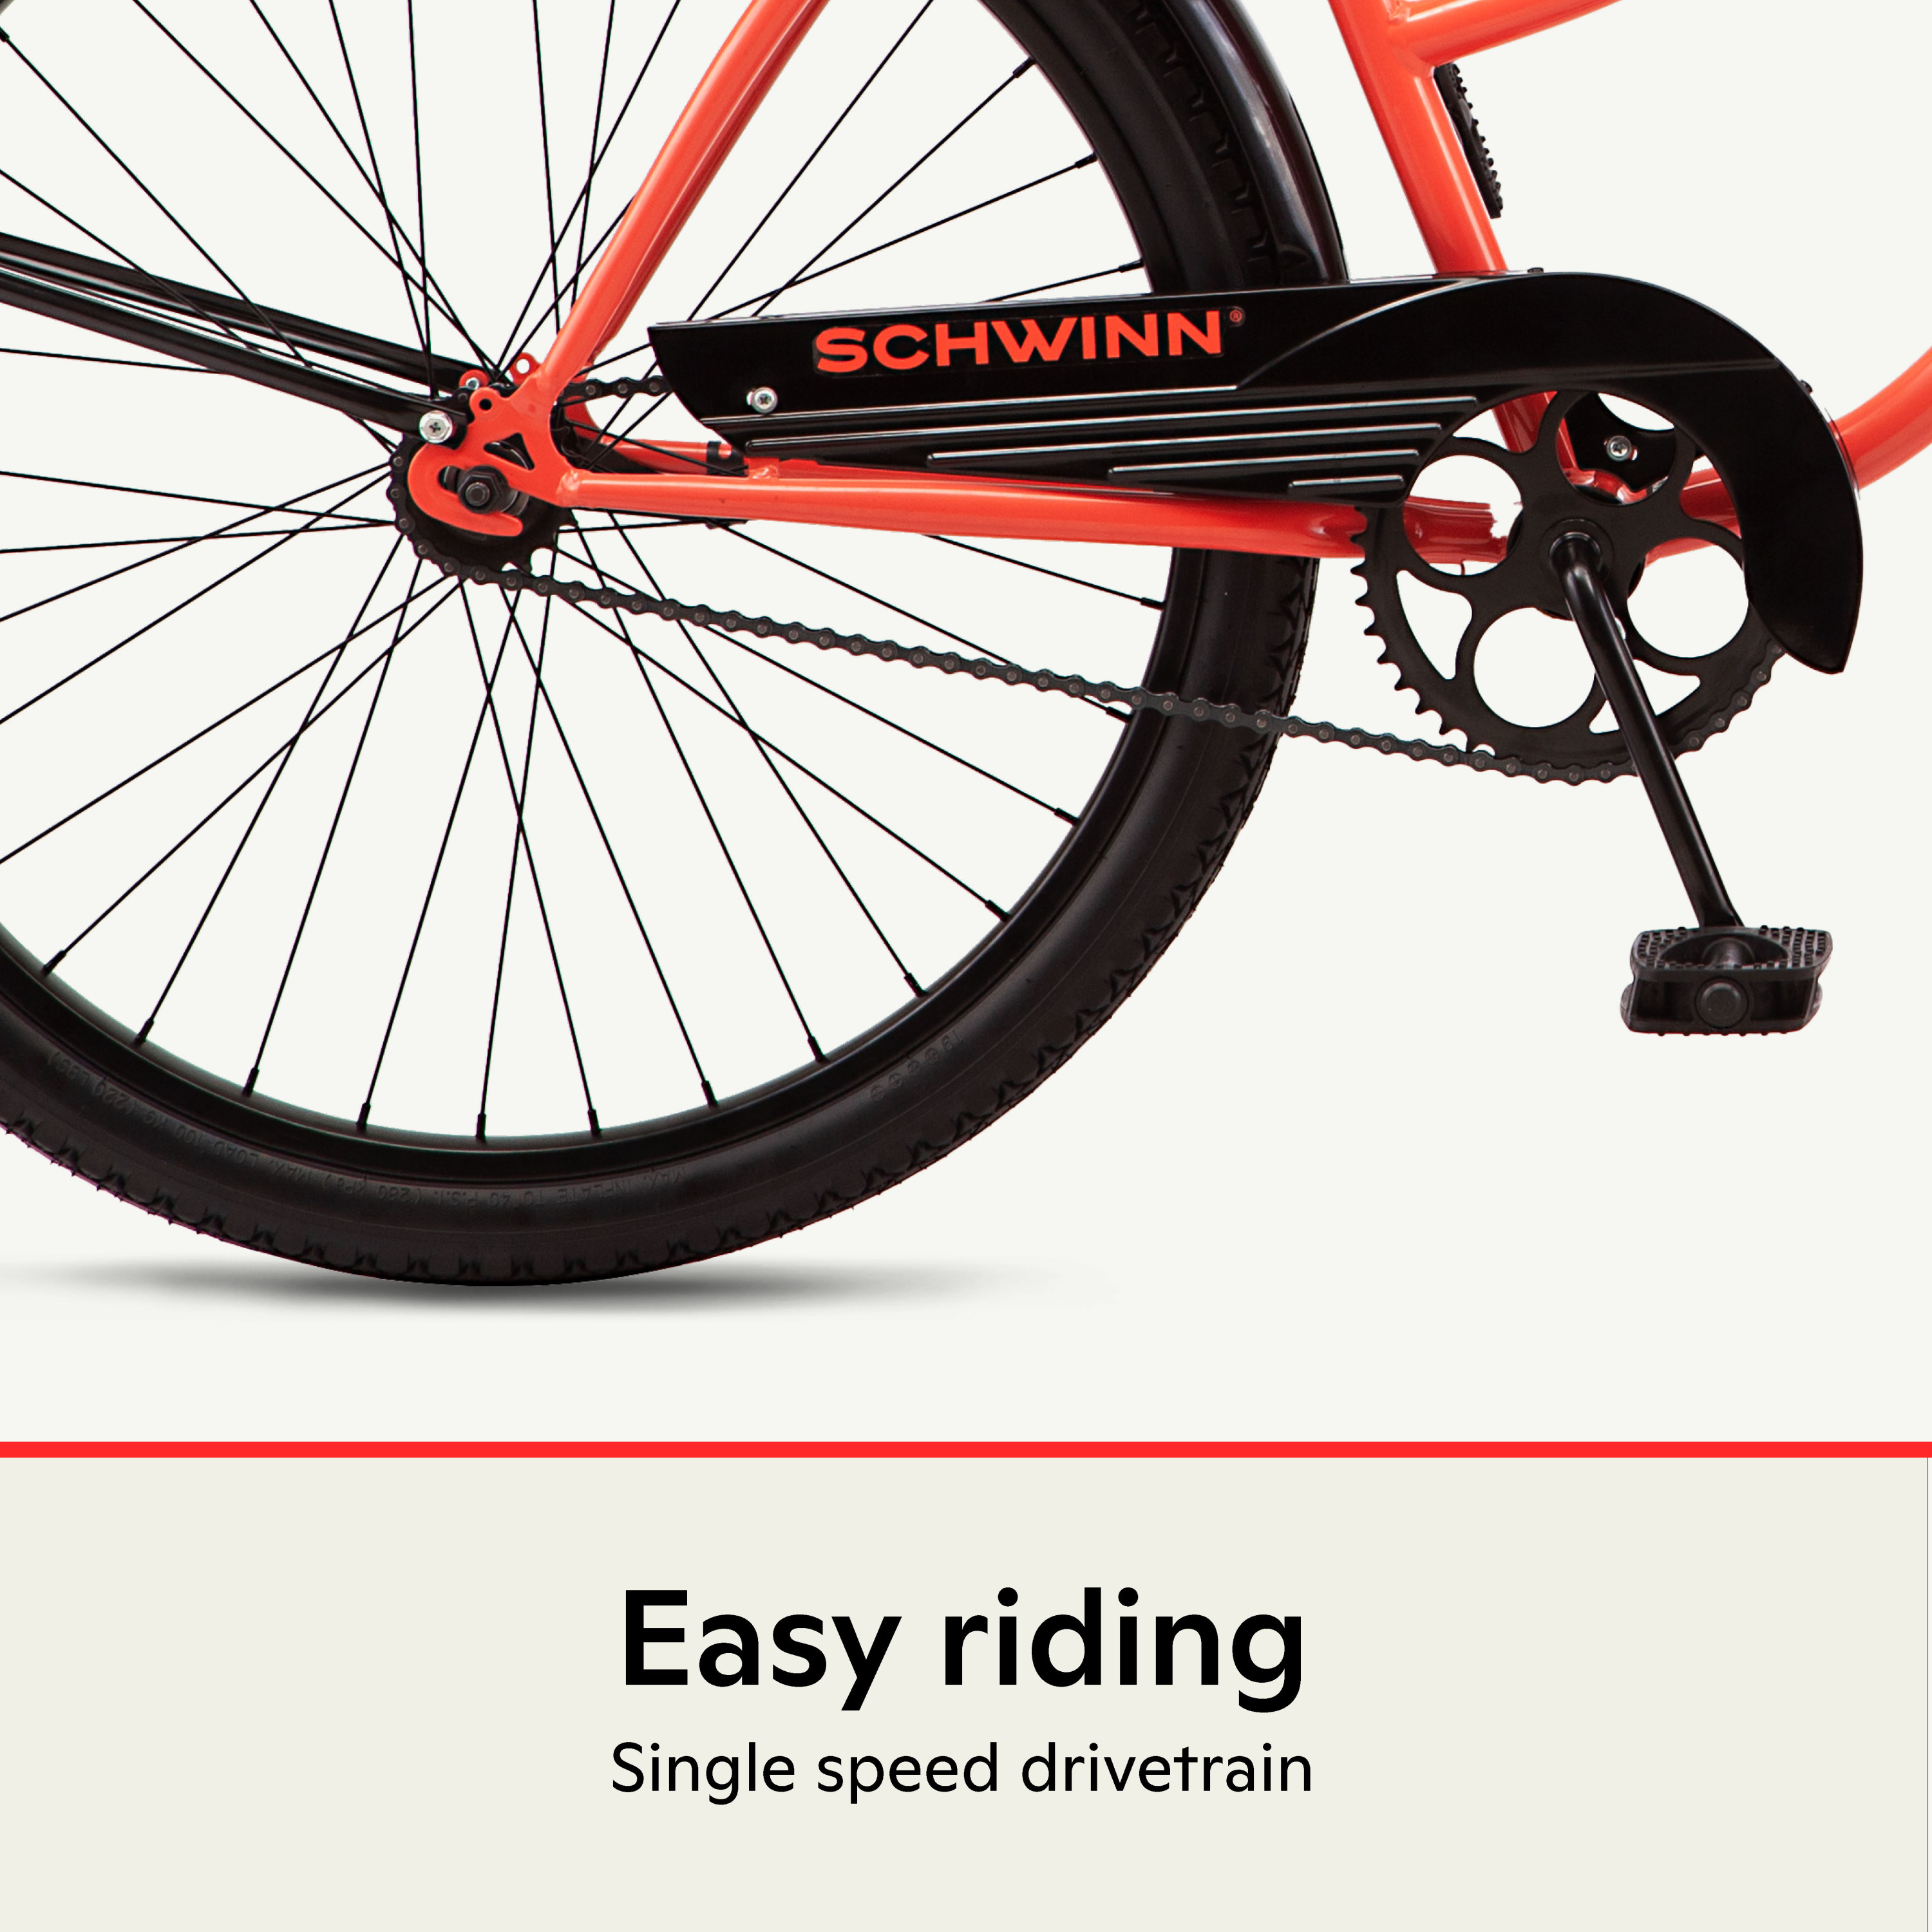 Schwinn Siesta cruiser bike, single speed, 26-inch wheels, coral, womens style - image 8 of 8